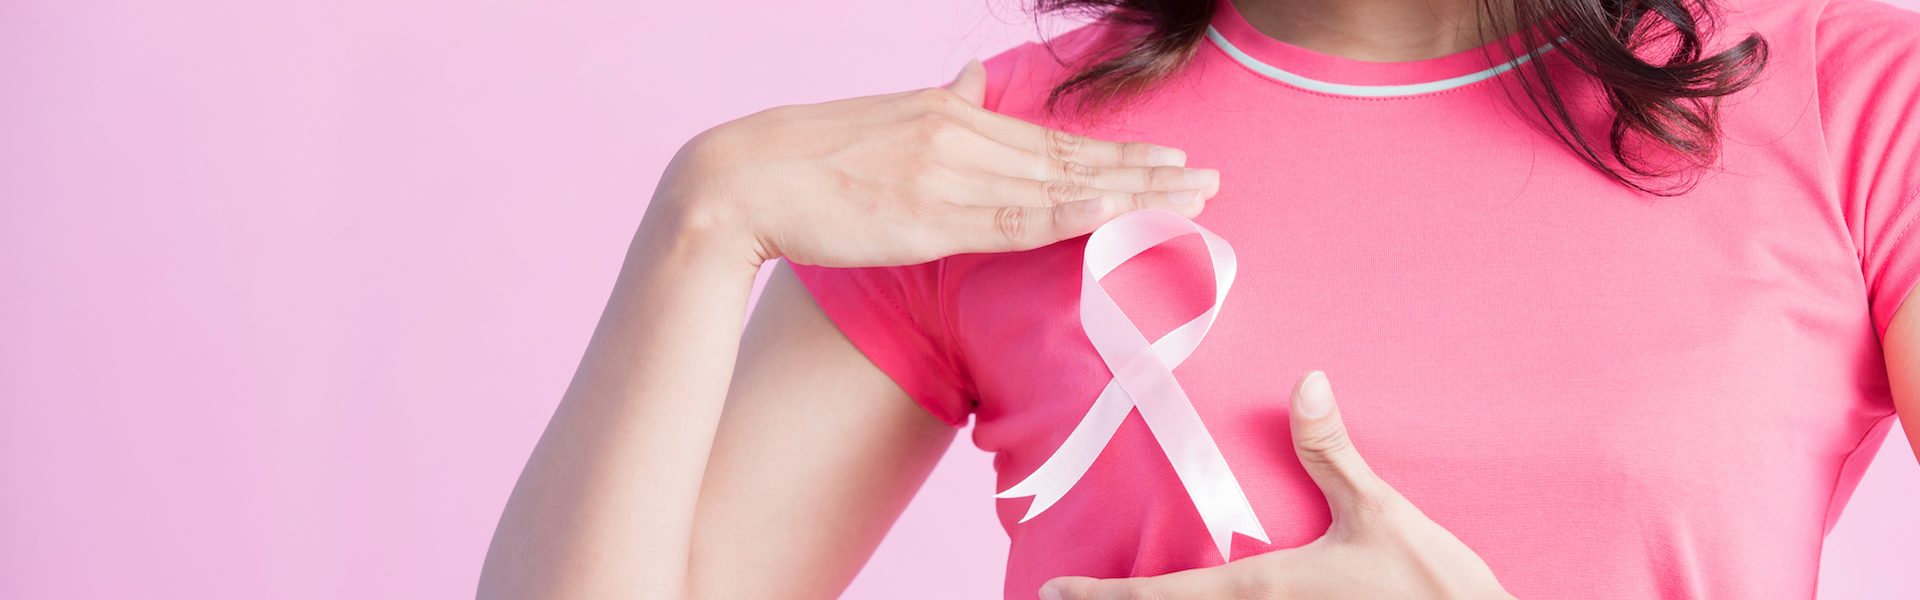 hidden scar breast cancer surgery - mercy health